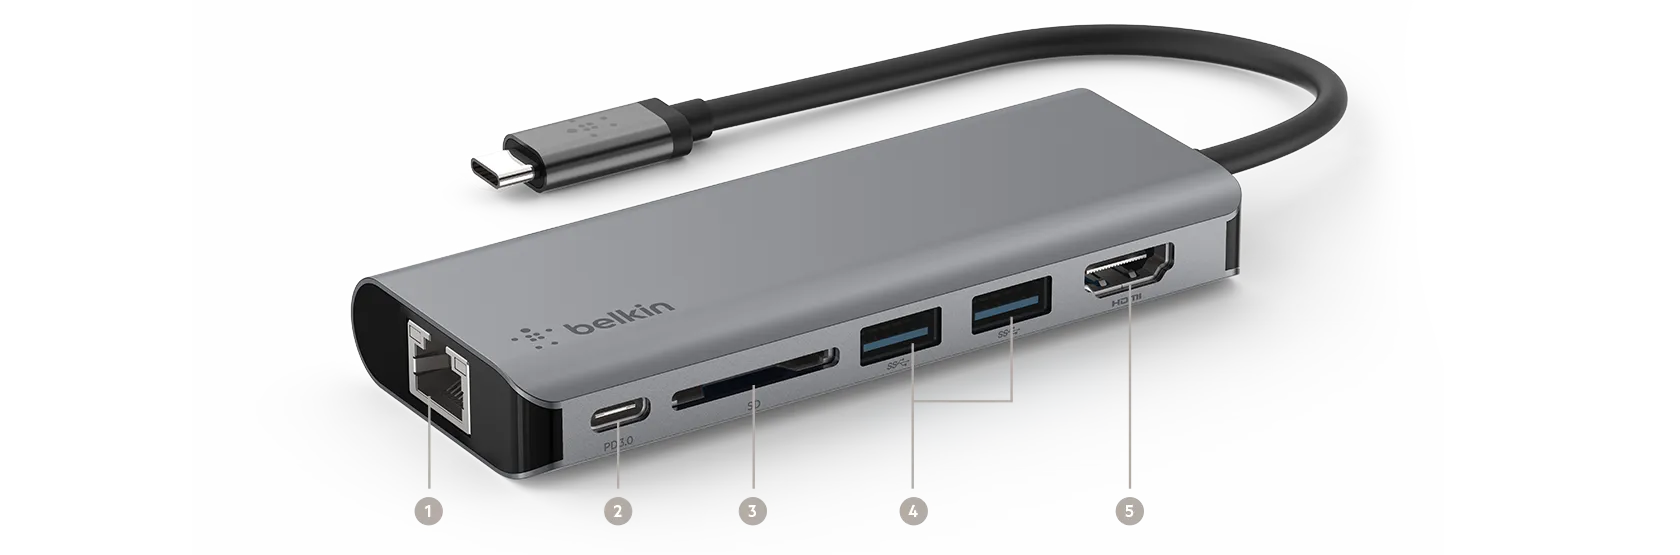 belkin CONNECT USB-C 6-in-1 Multiport Adapter hub#1